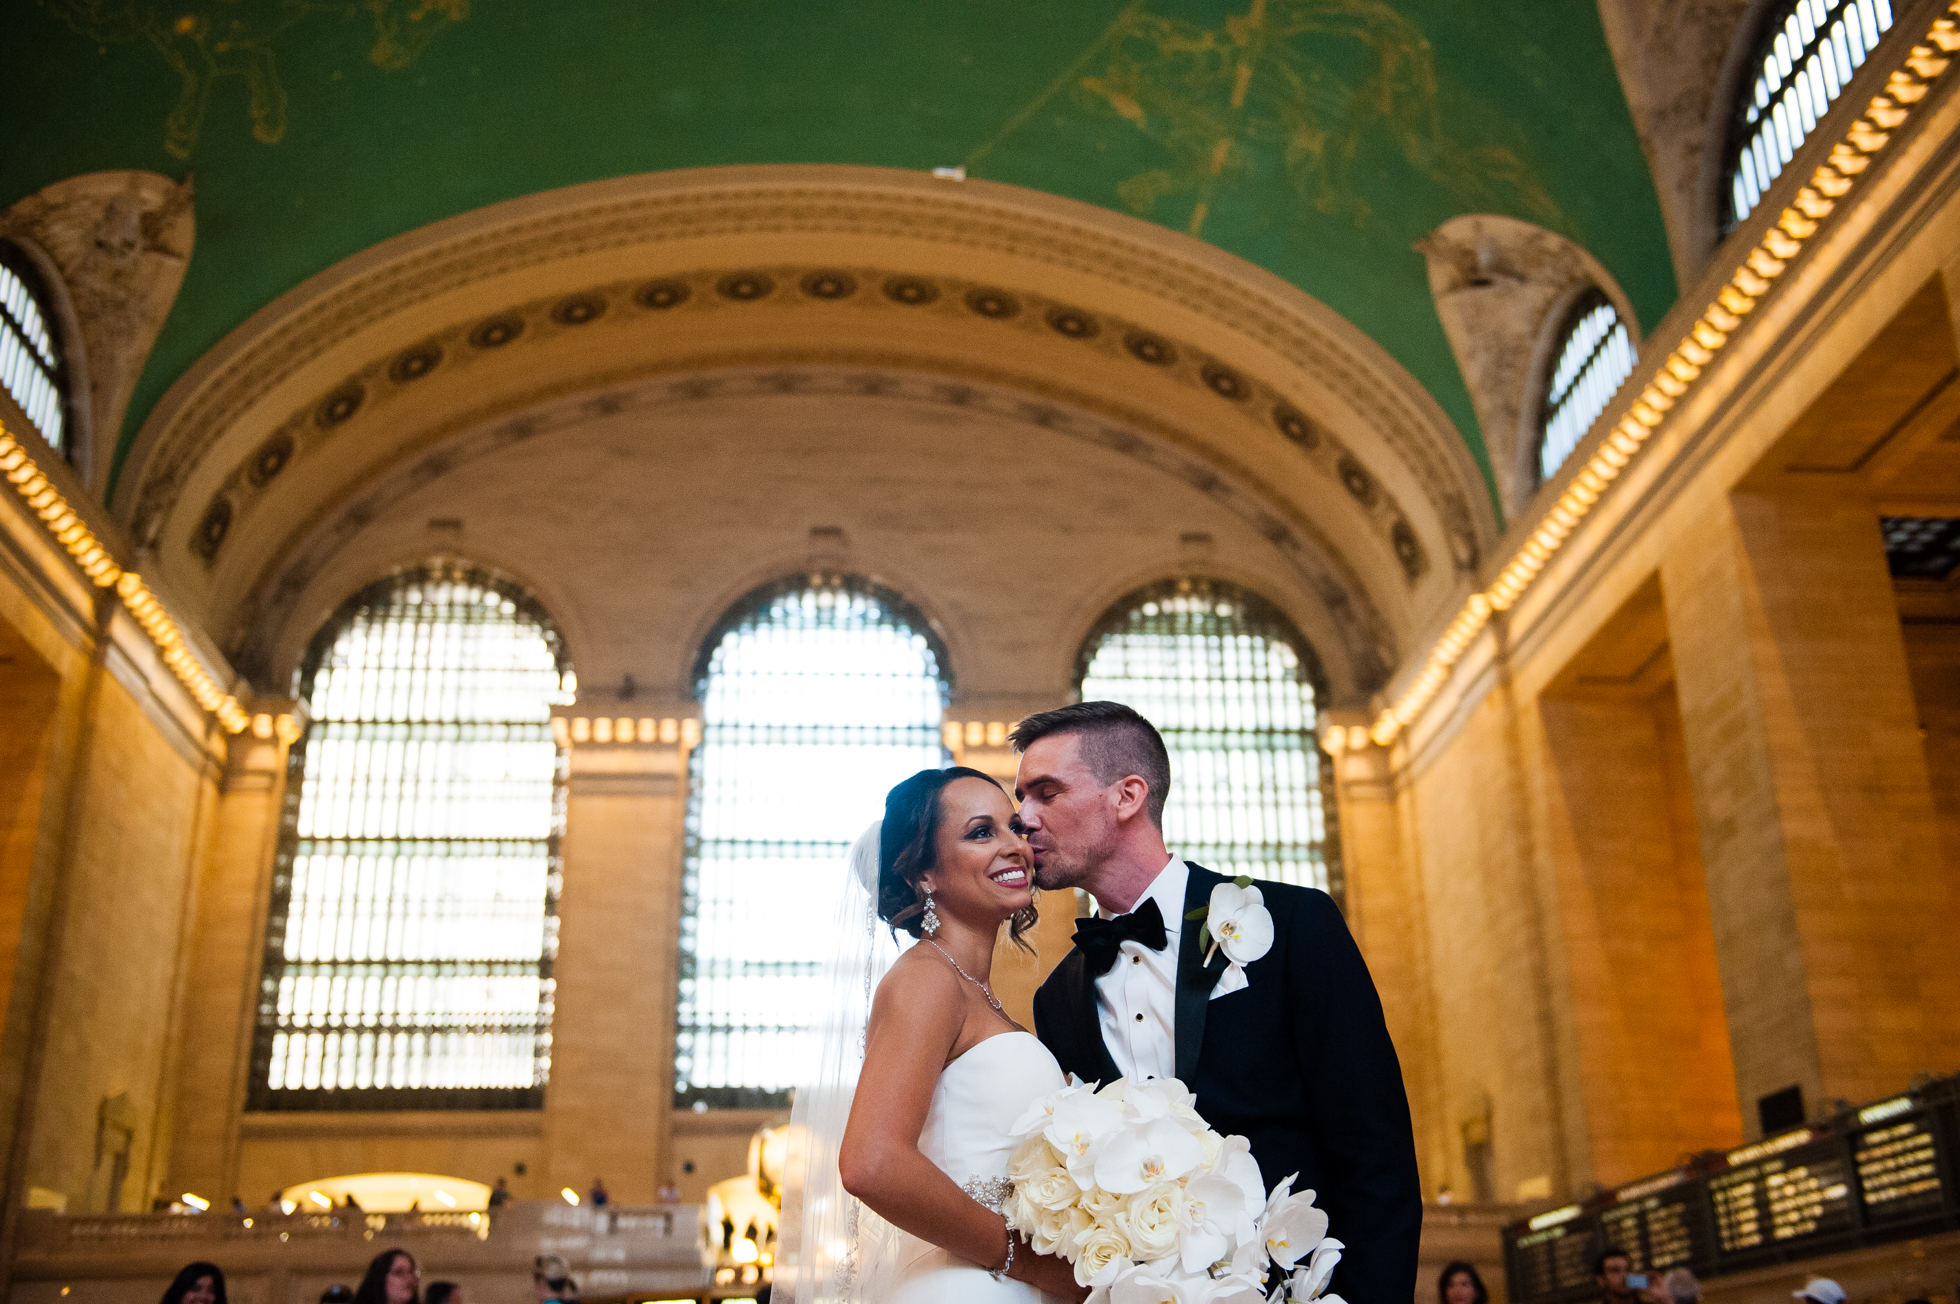 Grand Central Station wedding portraits